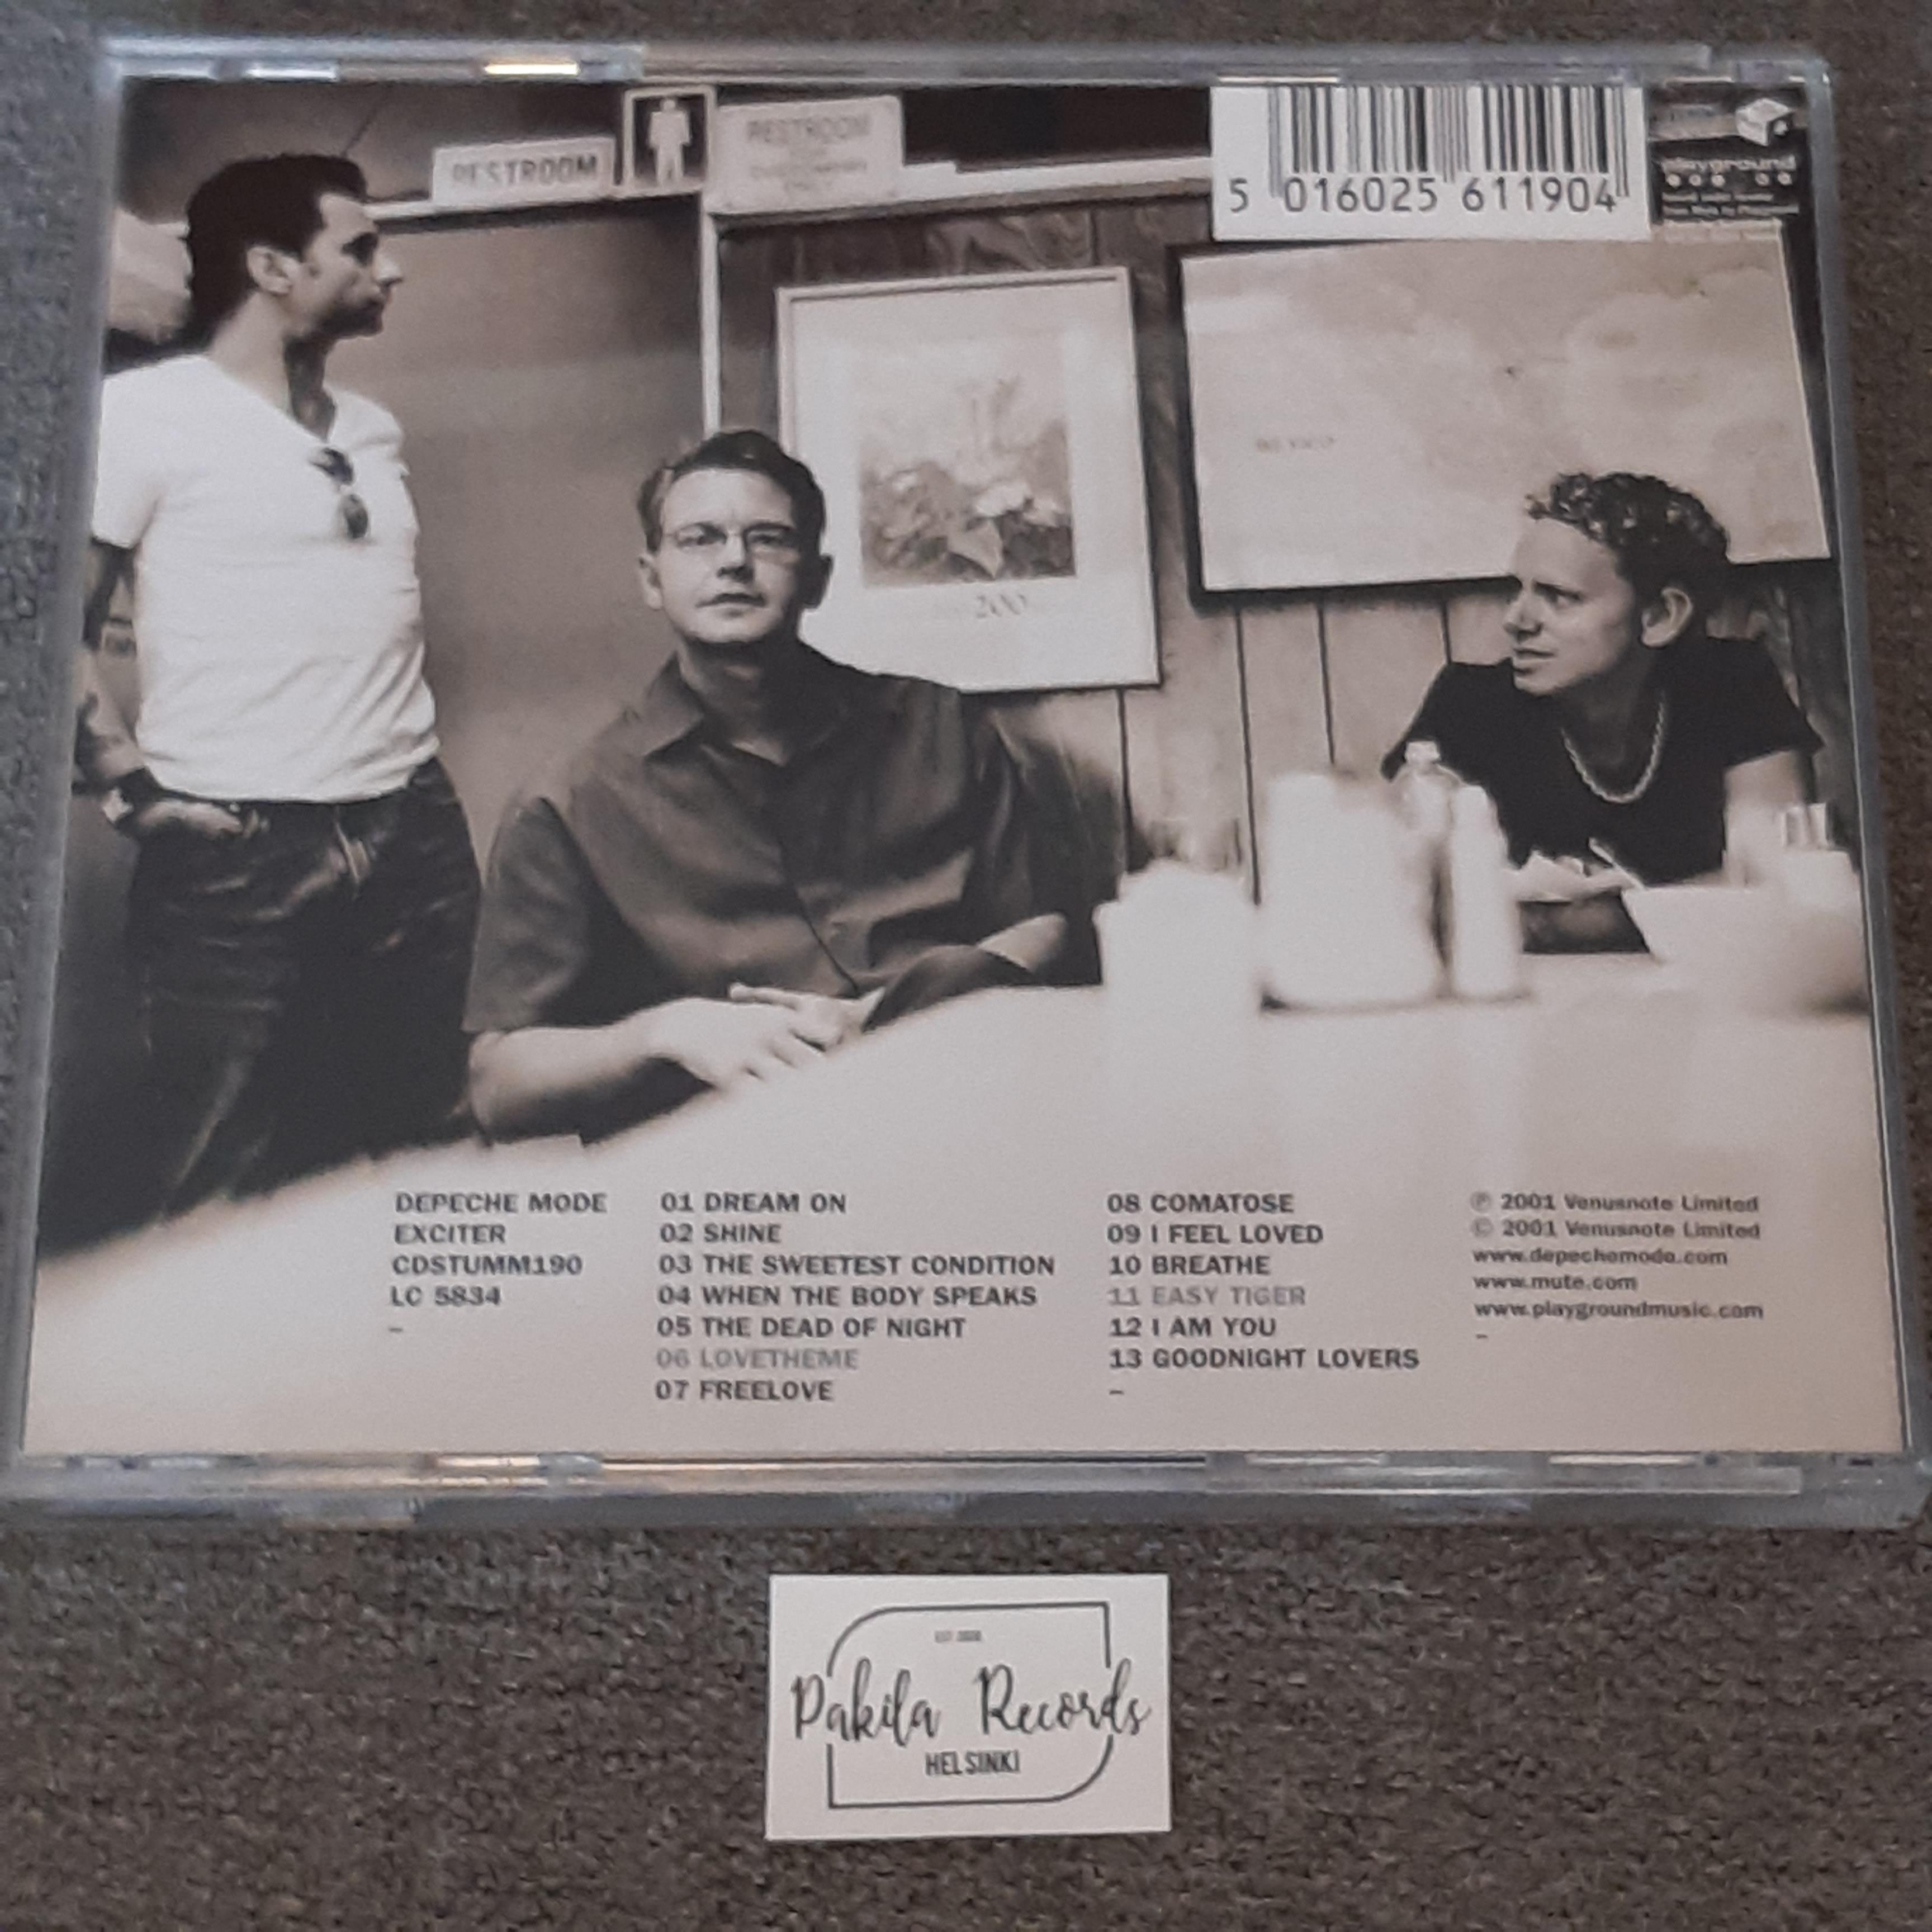 Depeche Mode - Exciter - CD (käytetty)